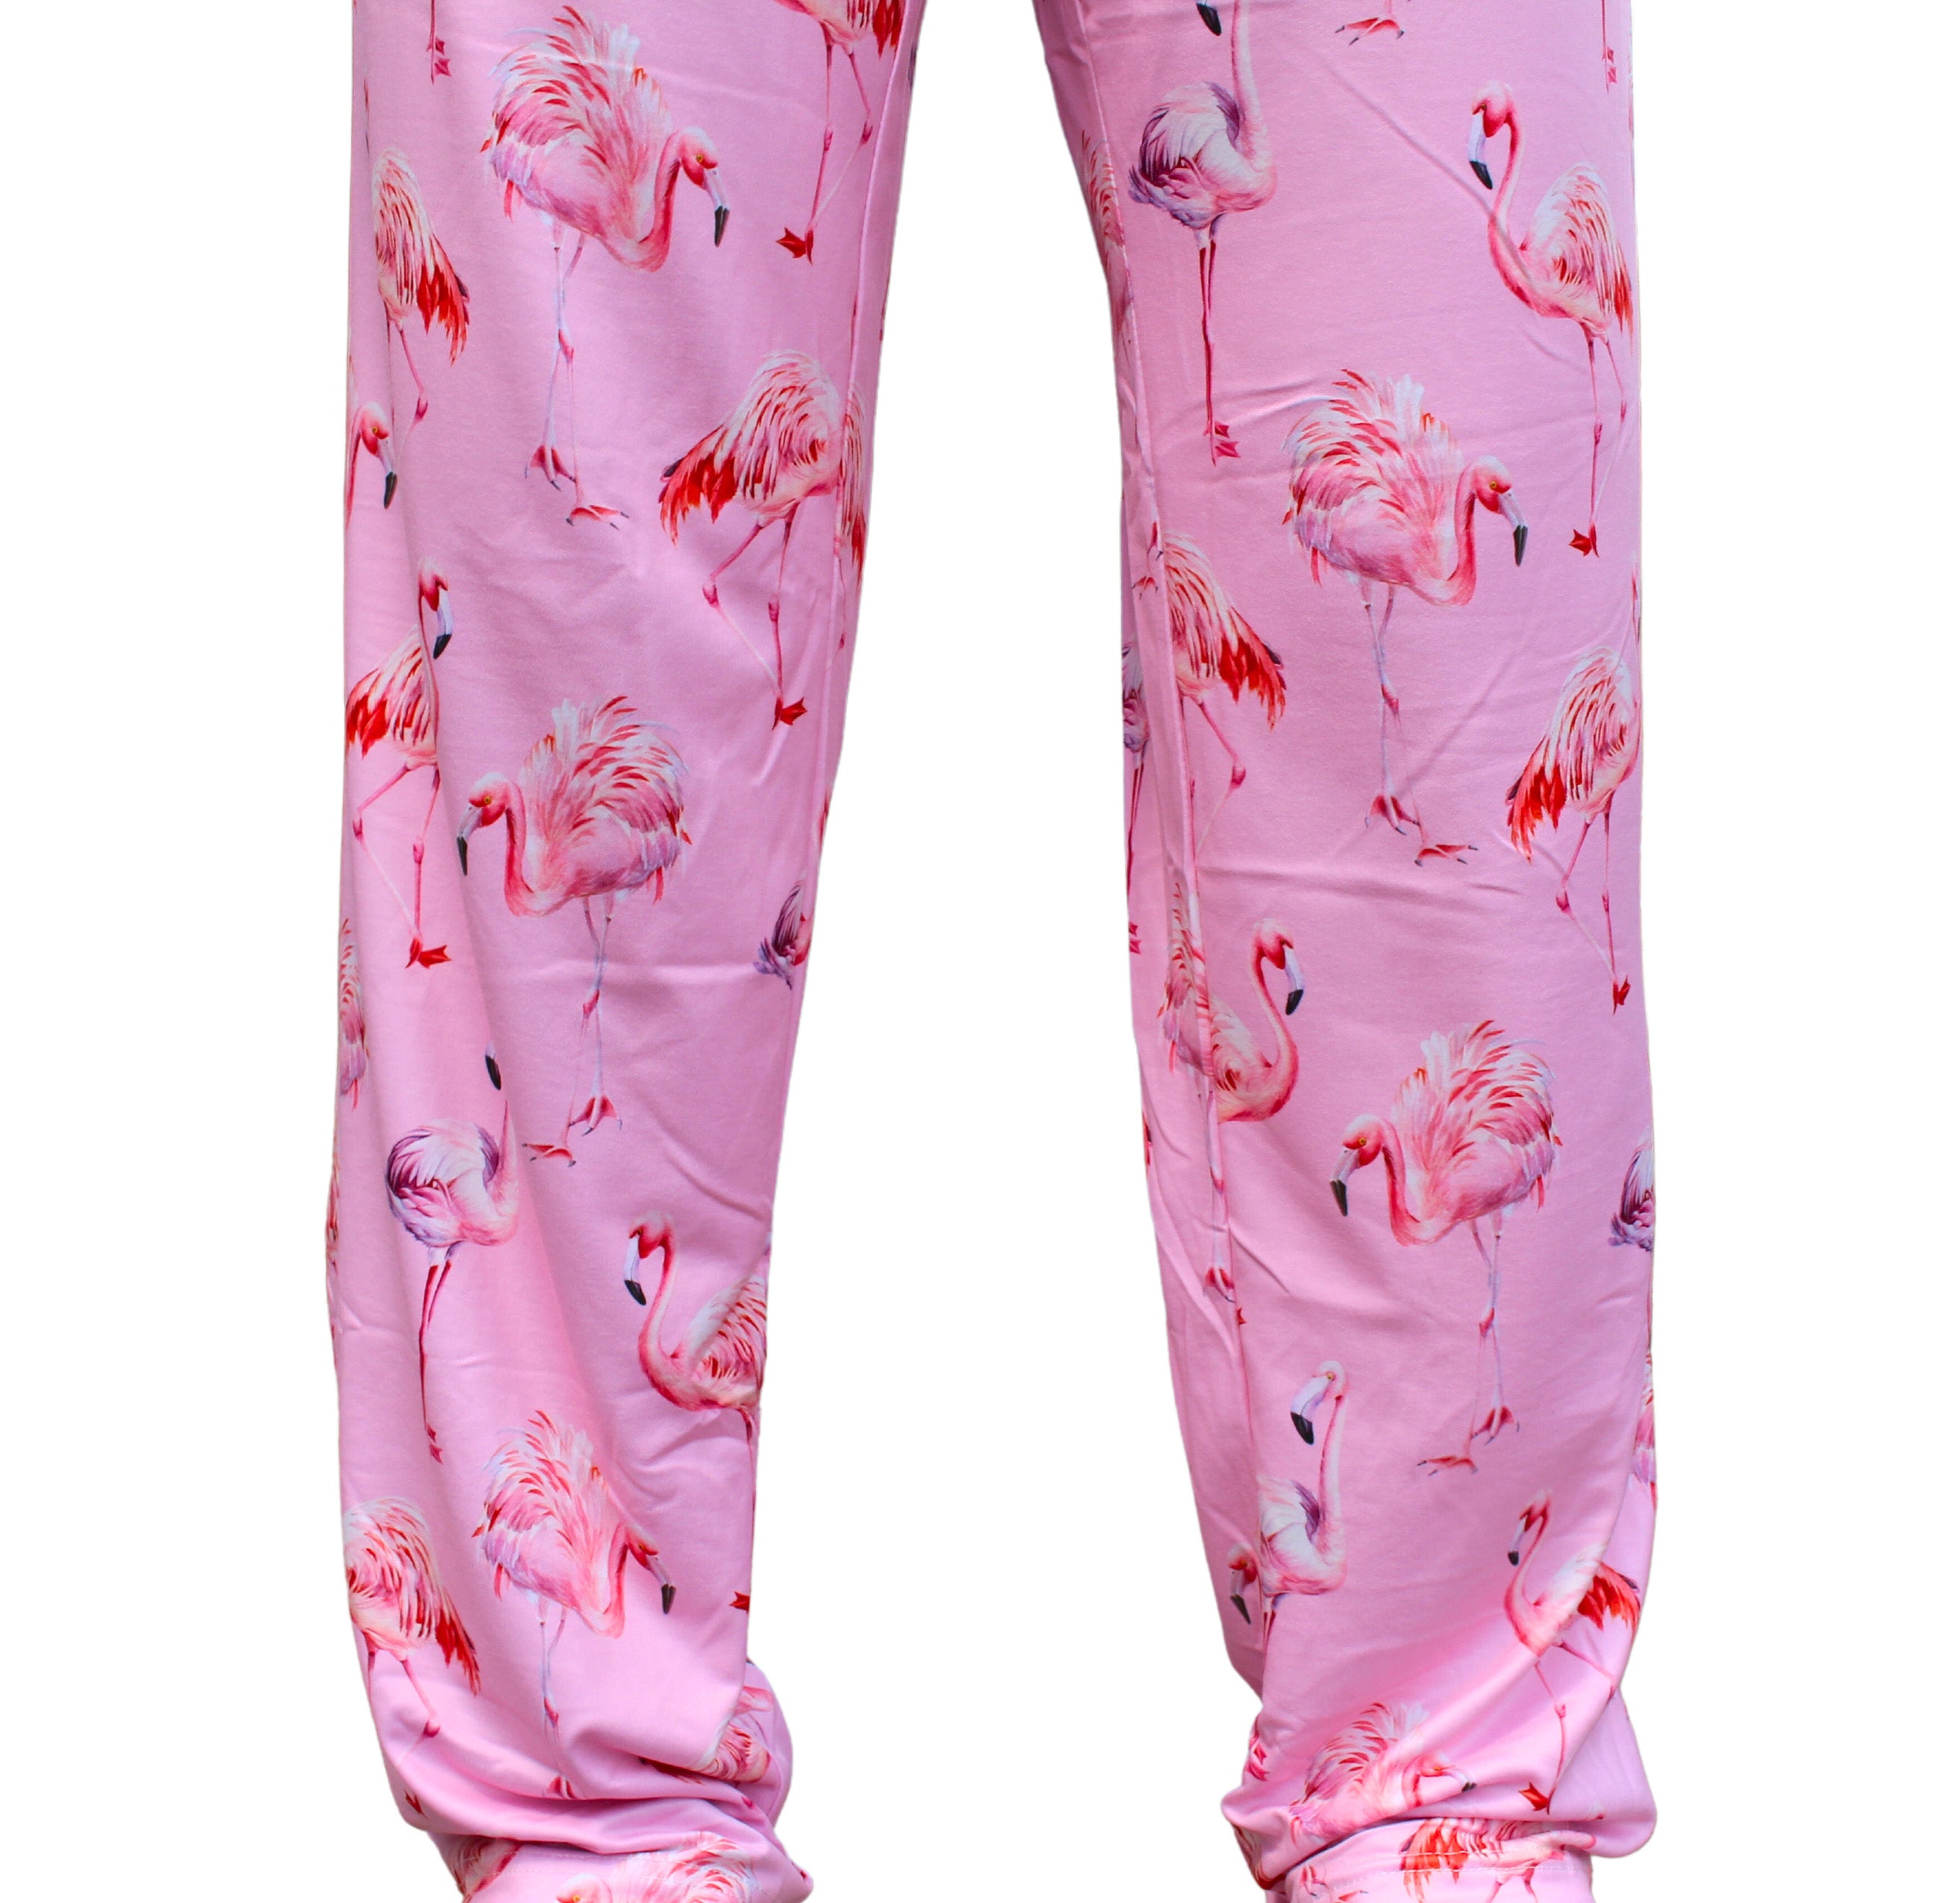 Fisyme Valentine Love Flamingo Pajama Pants for Women Soft Comfy